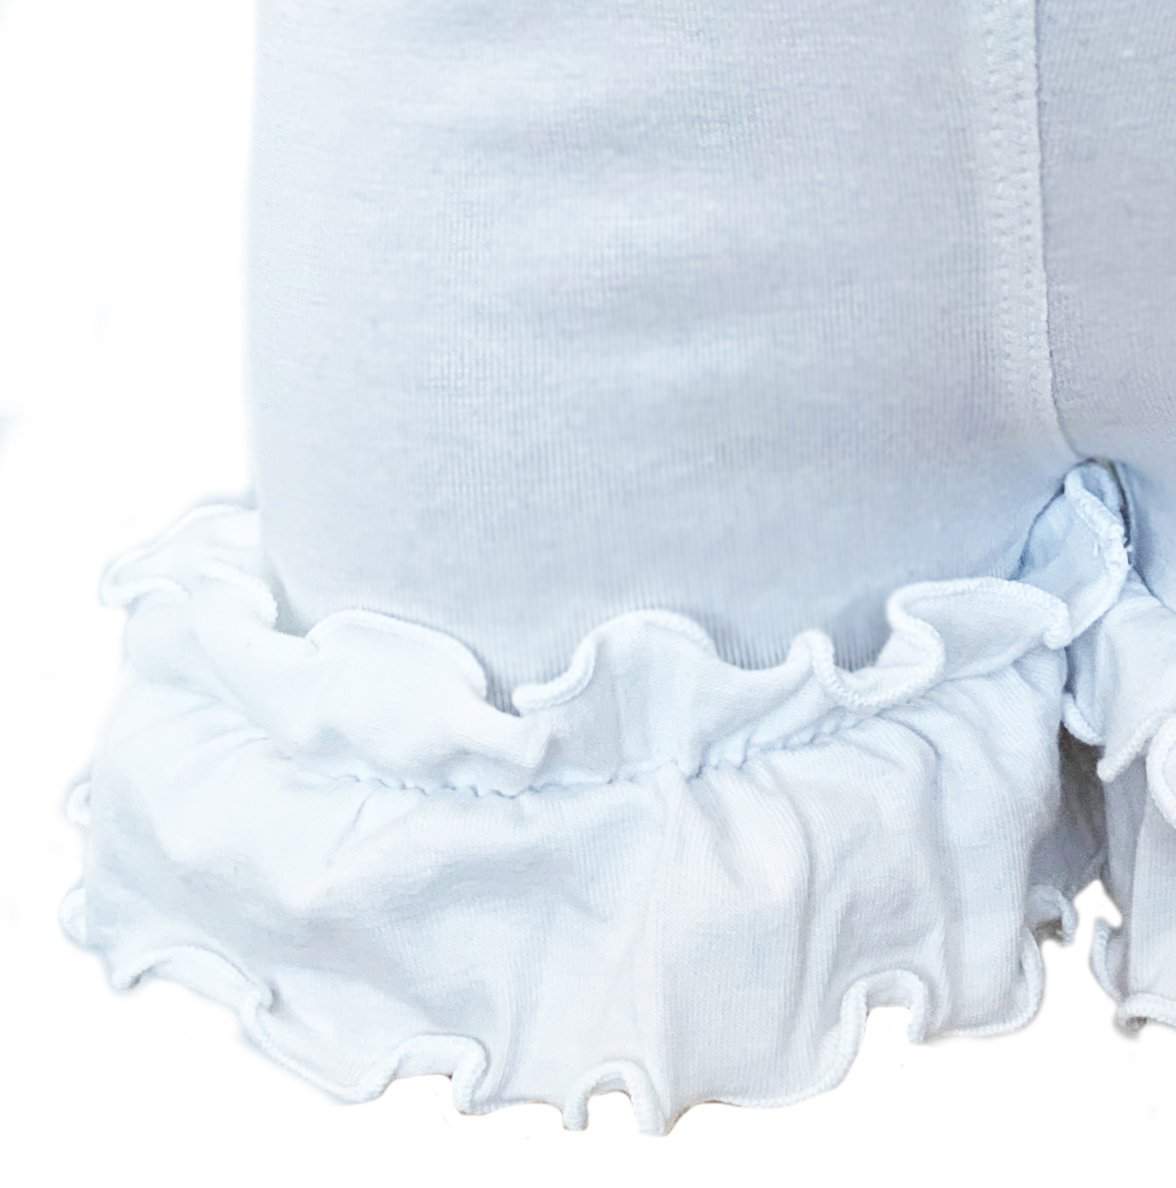 Girls White Knit Ruffle Shorts 4/5T-7/8-AnnLoren-4-5T,6,7-8,ANNLOREN,Shorts,Spring & Summer,Spring & Summer 2020,White